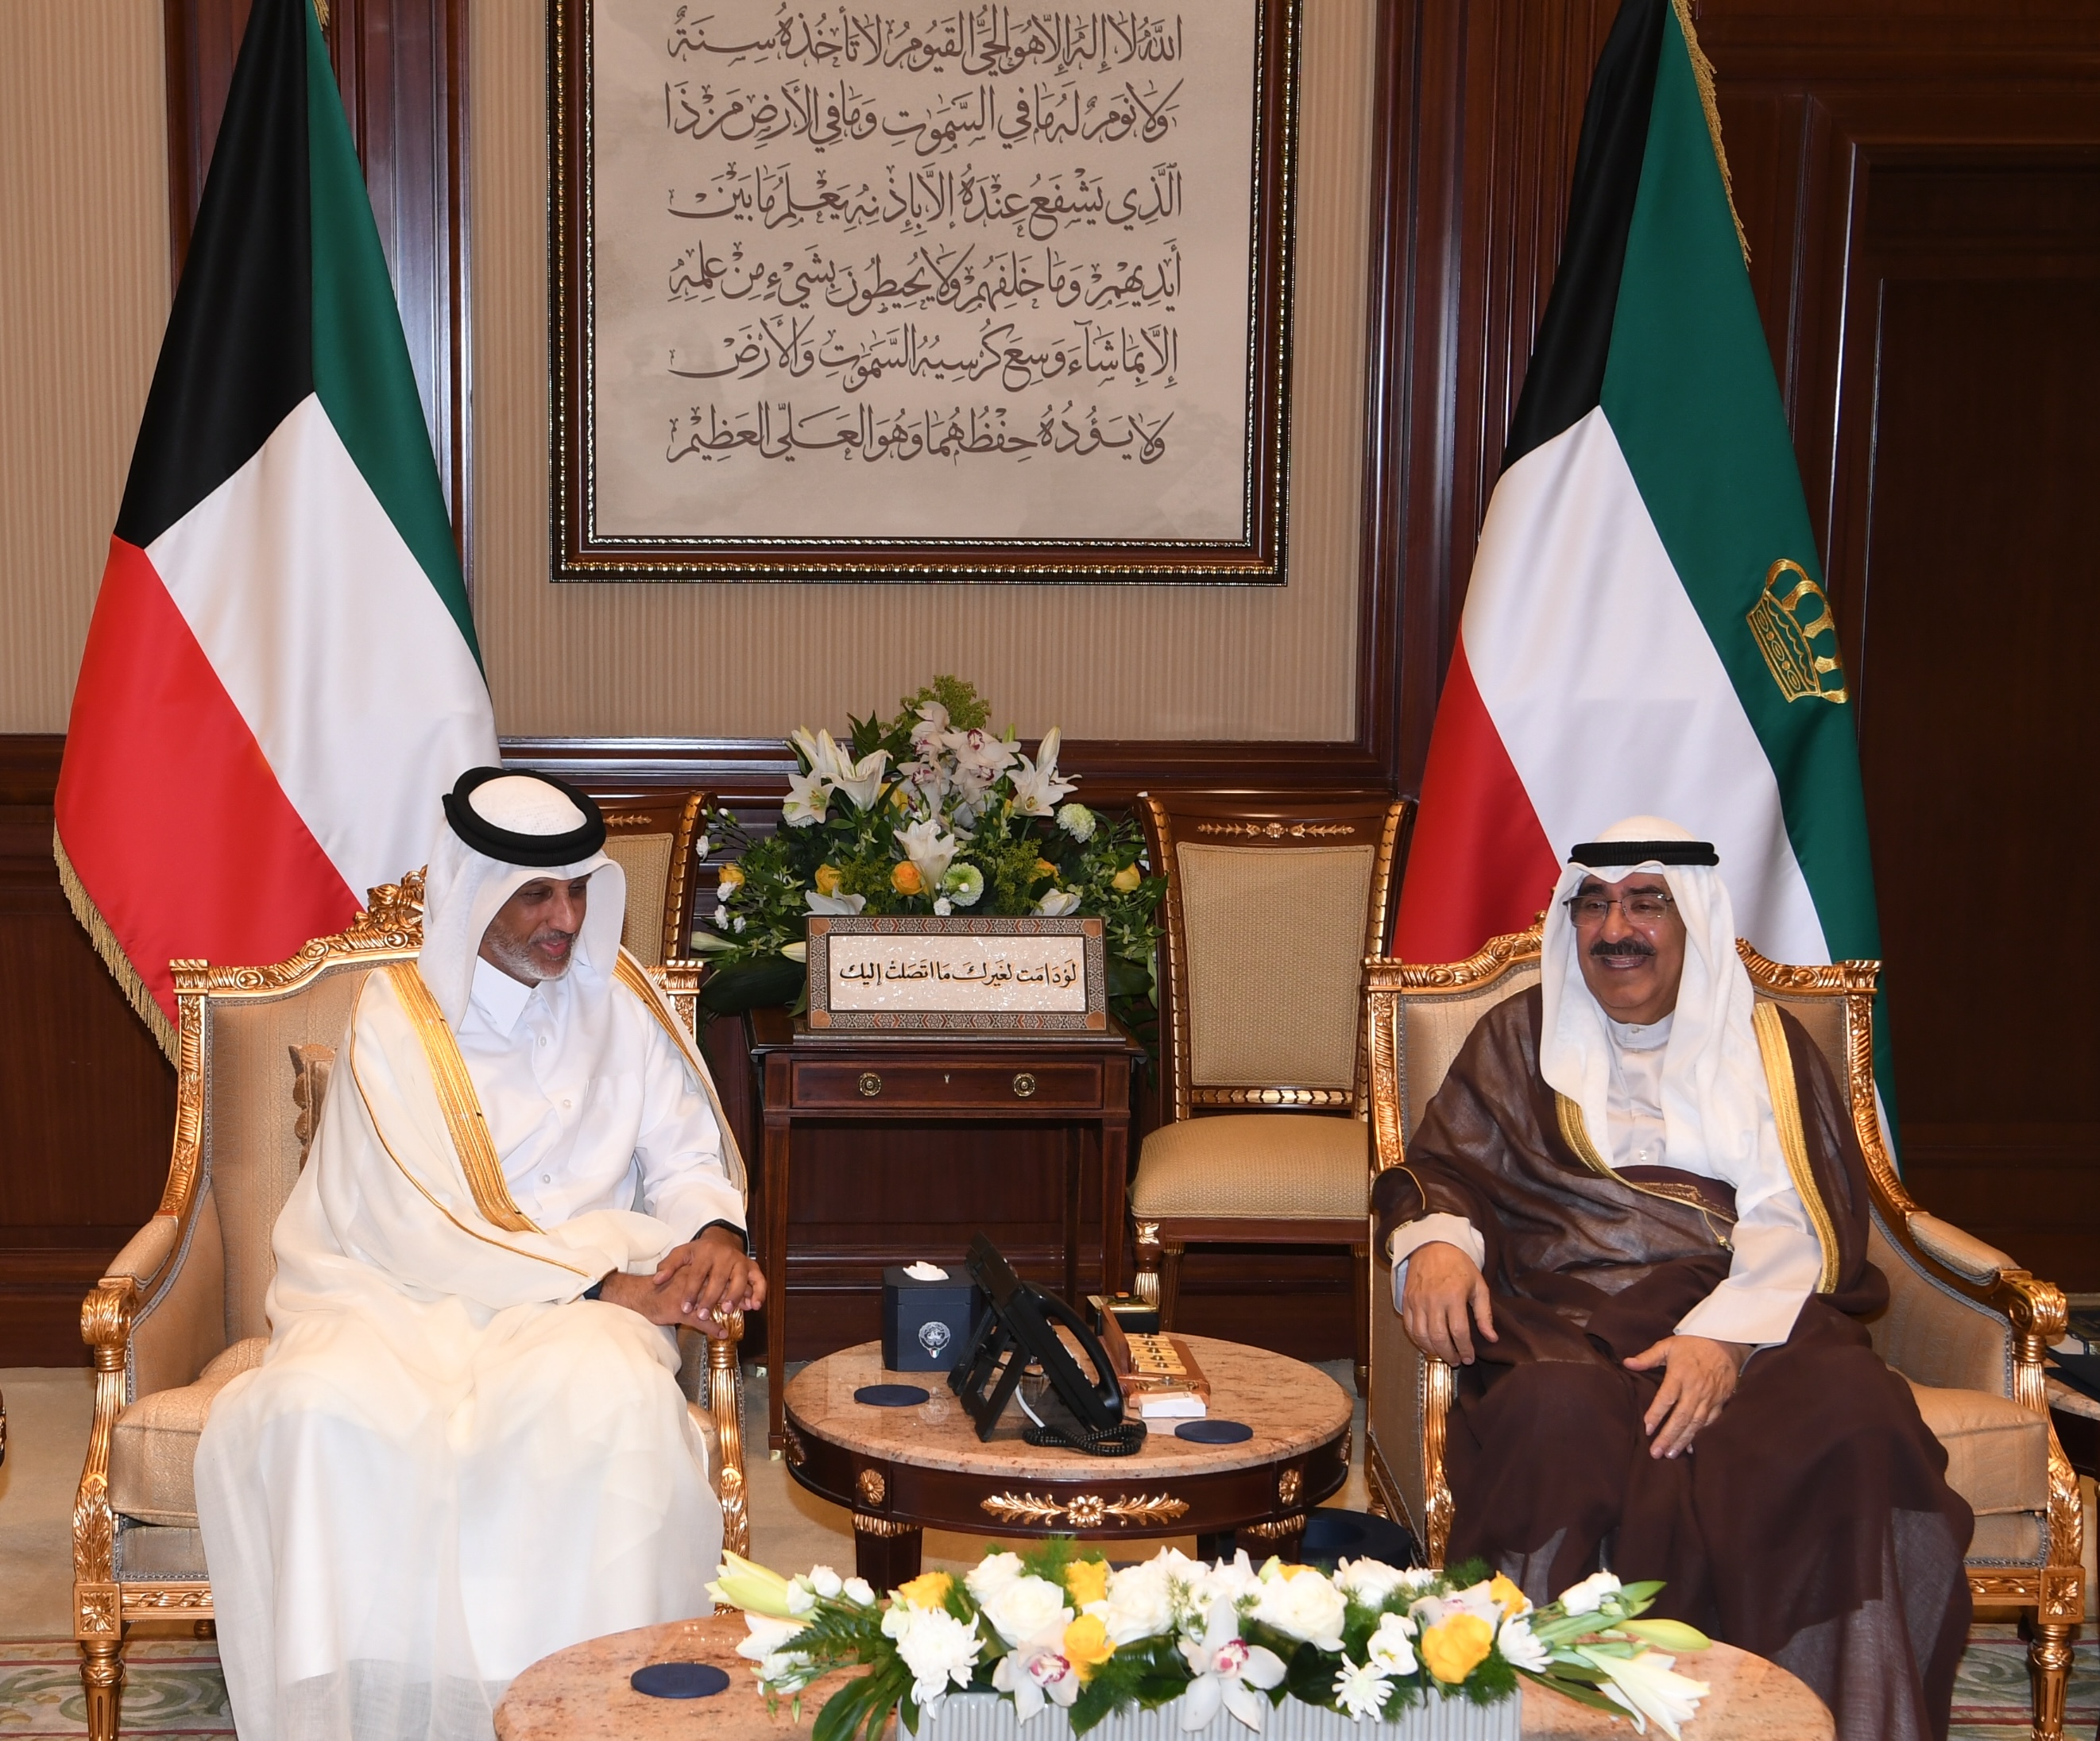 Kuwait Amir receives Qatari Minister of Sports and Youth, Sheikh Hamad bin Khalifa bin Ahmed Al-Thani